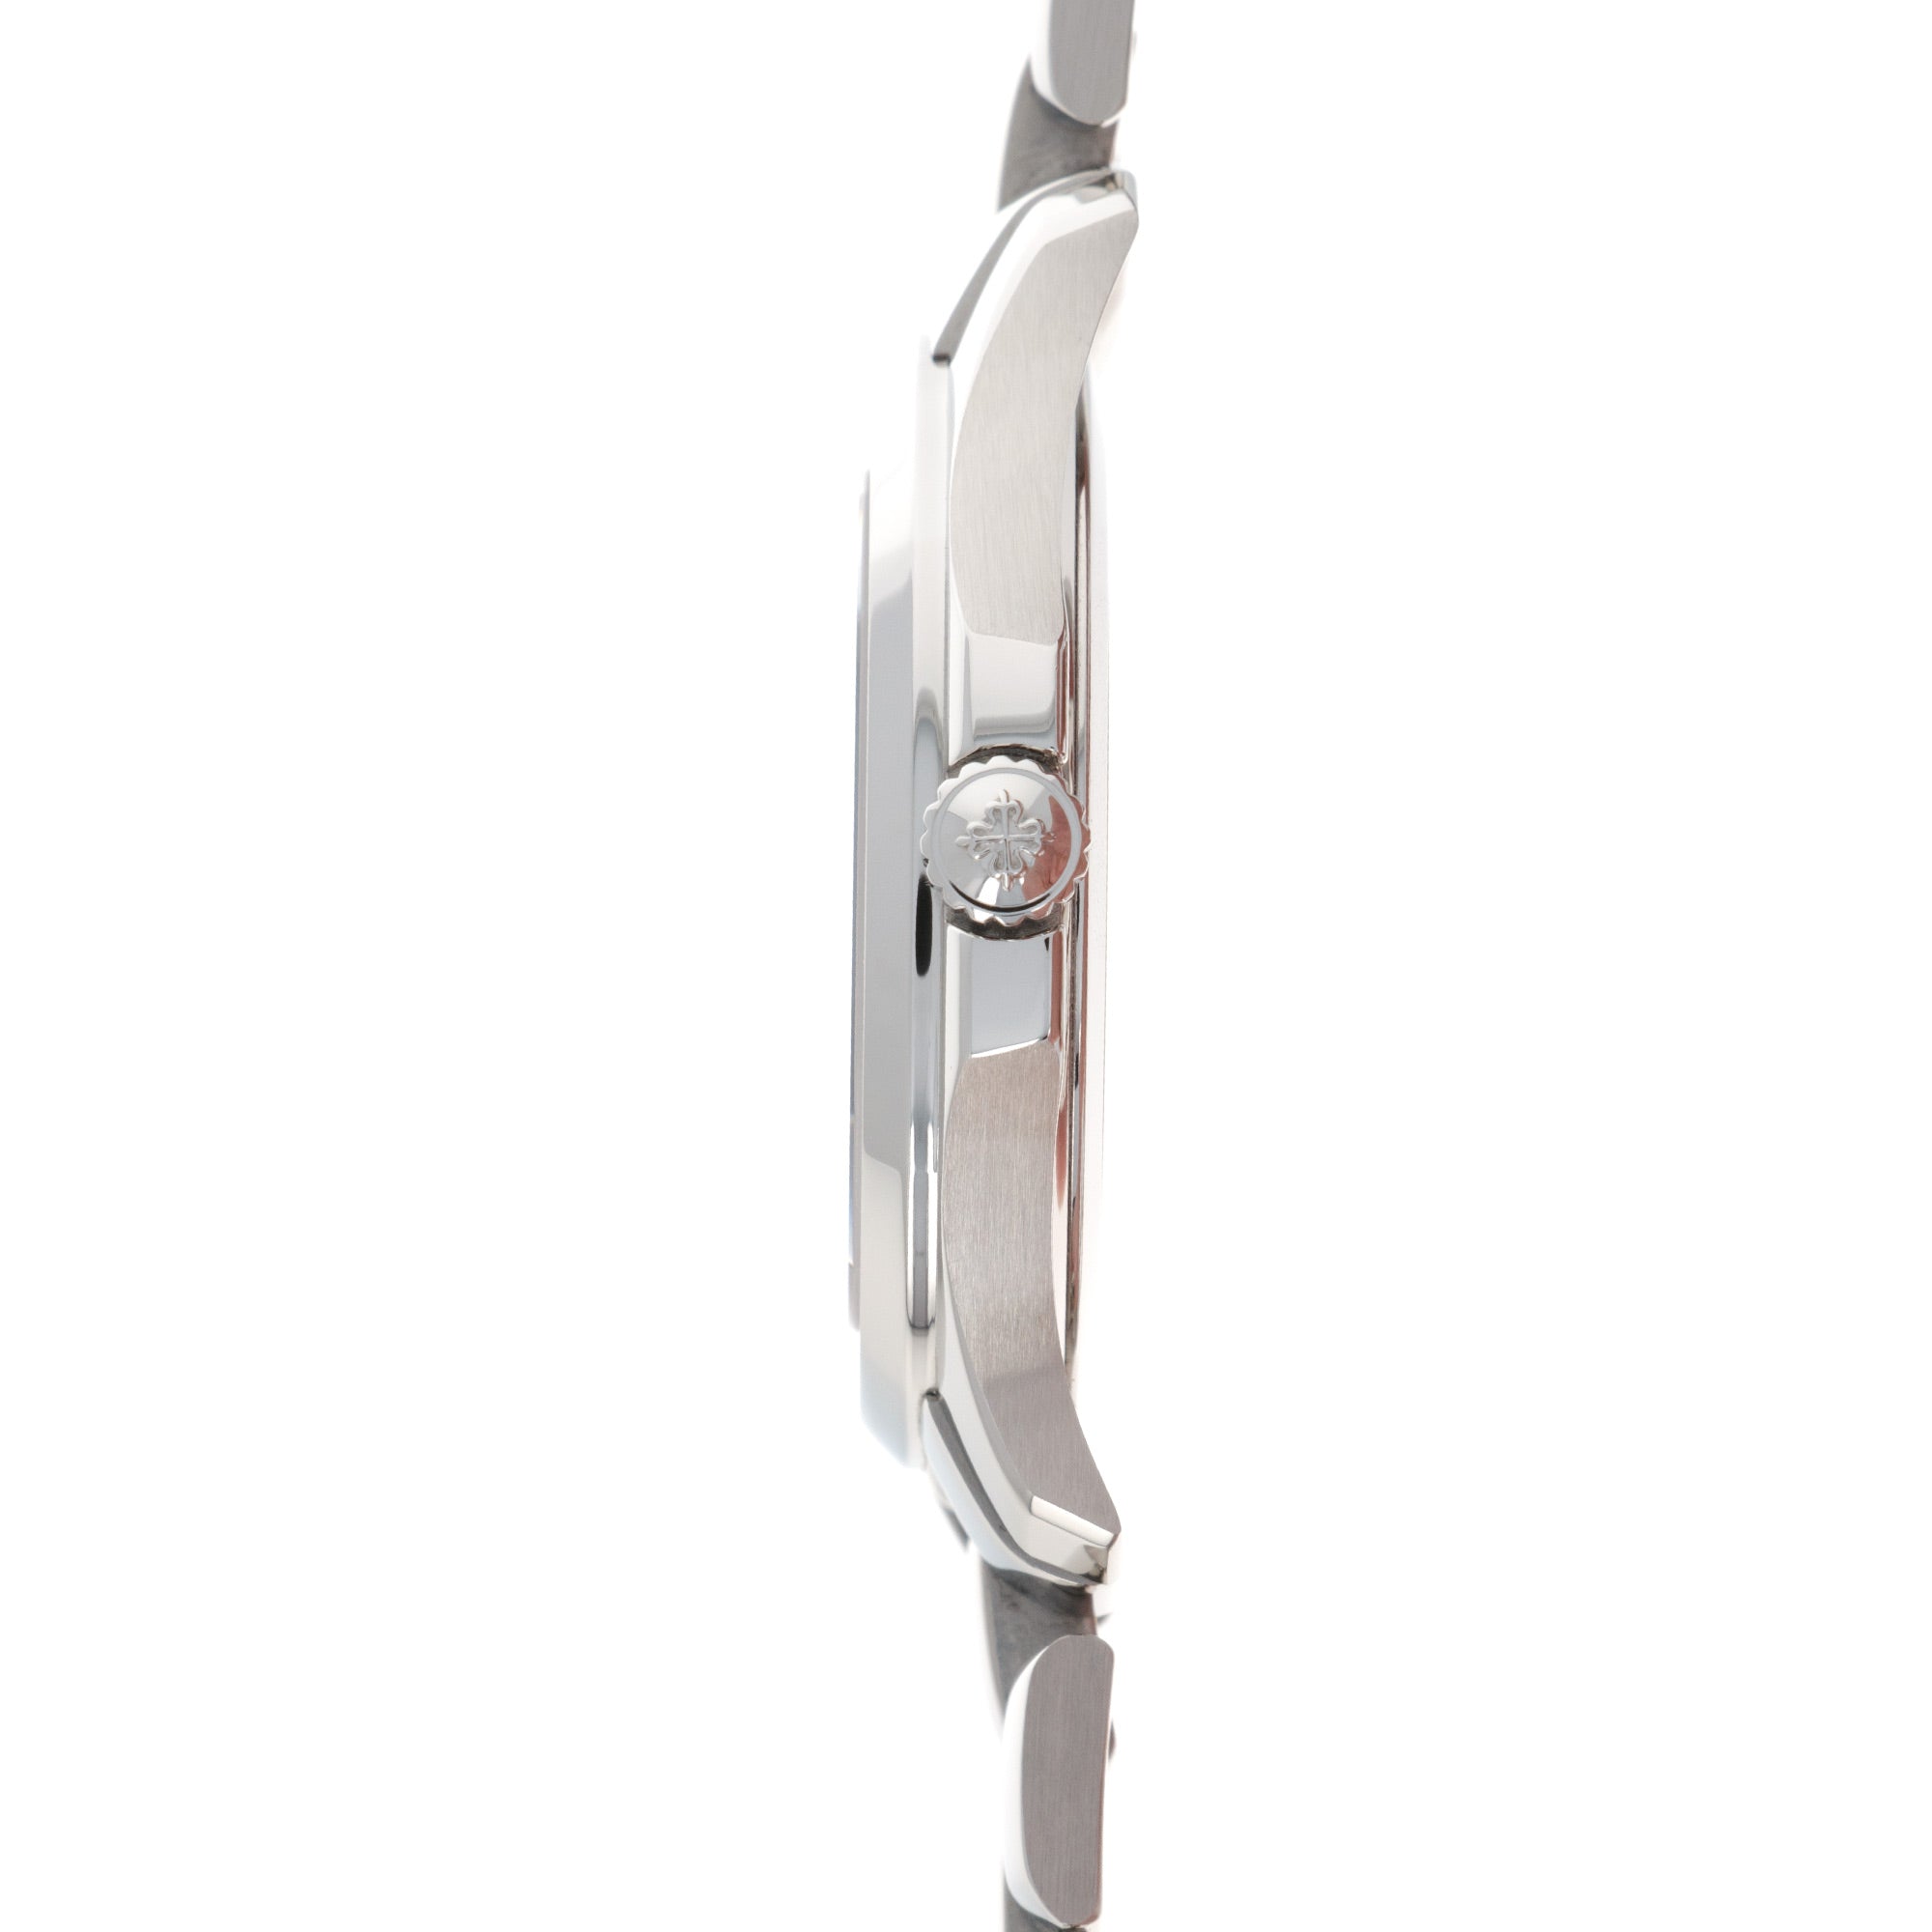 Patek Philippe - Patek Philippe Aquanaut Automatic Watch Ref. 5167 - The Keystone Watches